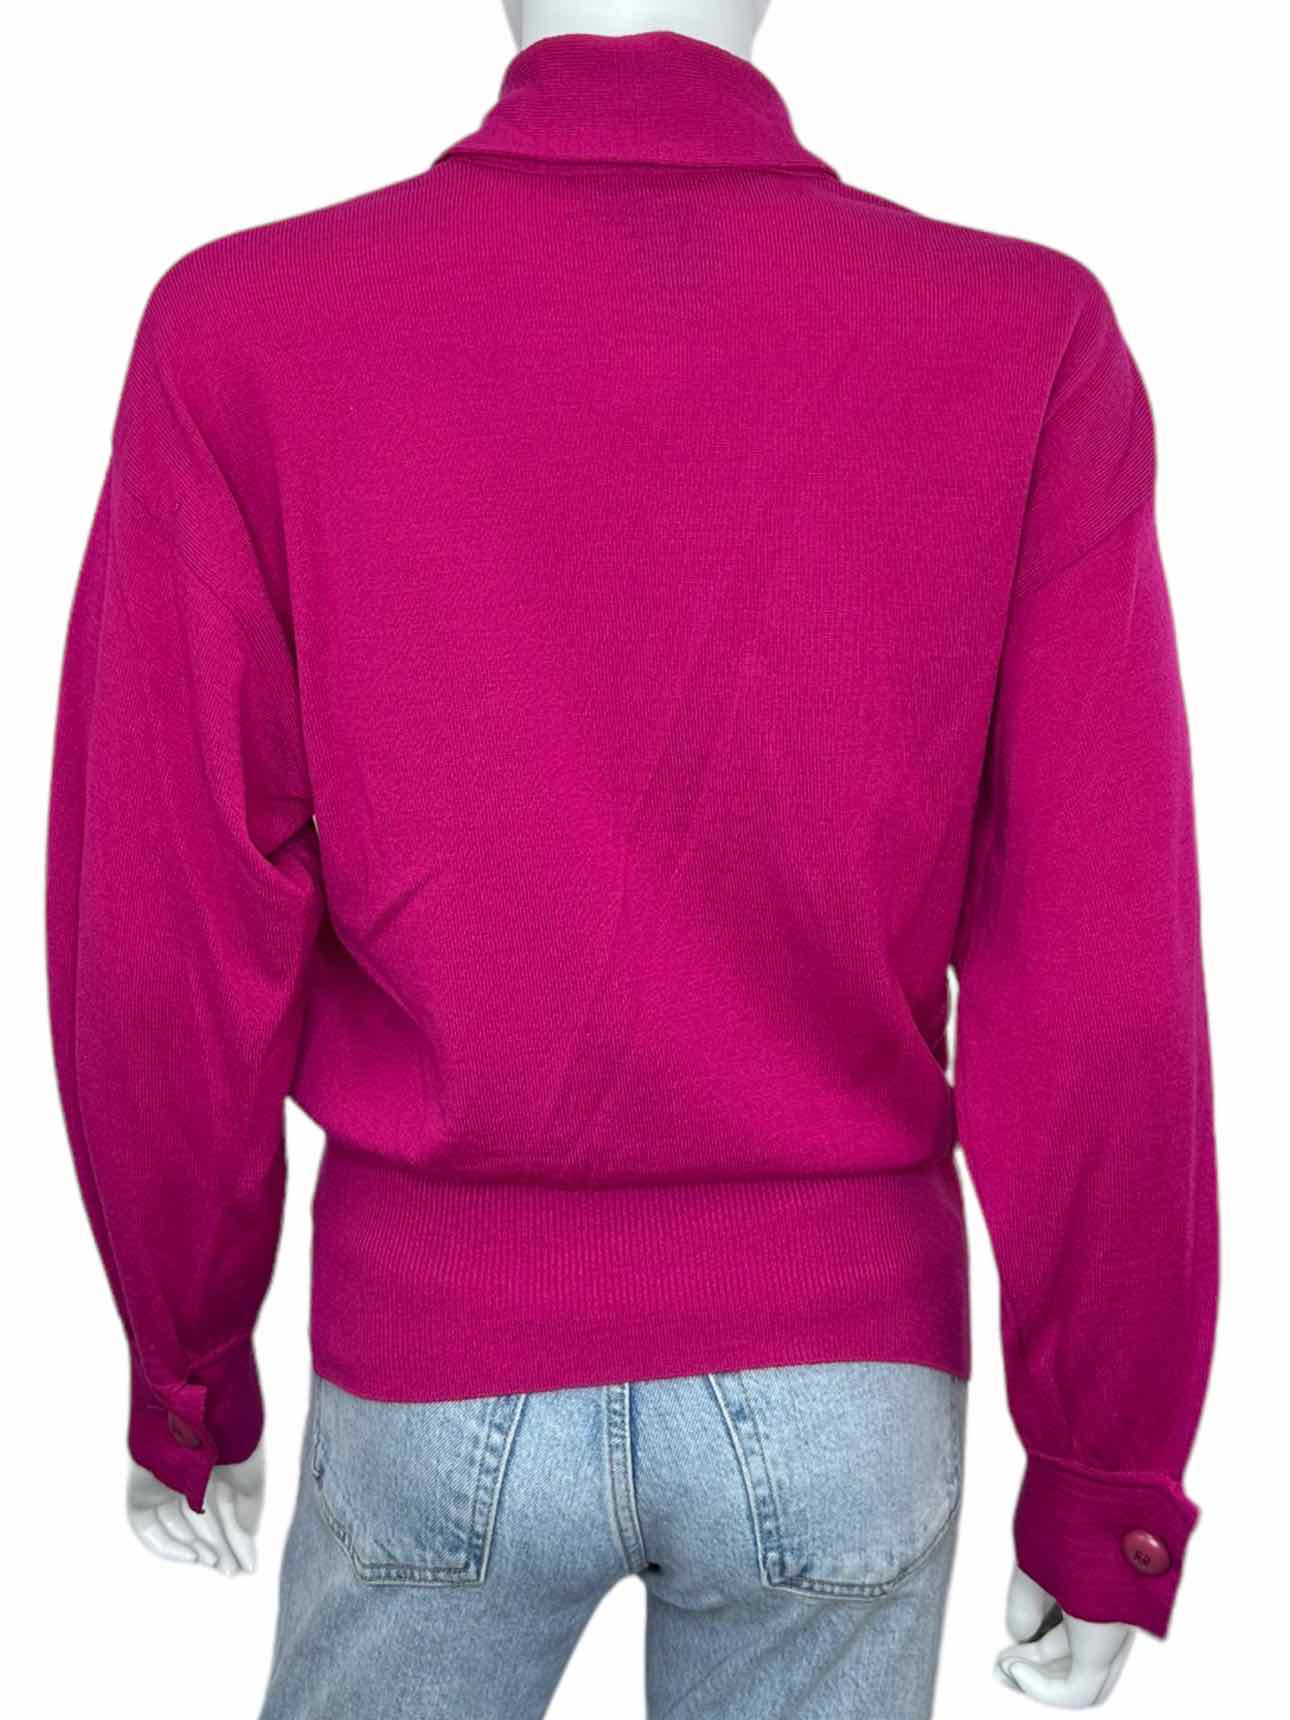 bright pink vintage sweater